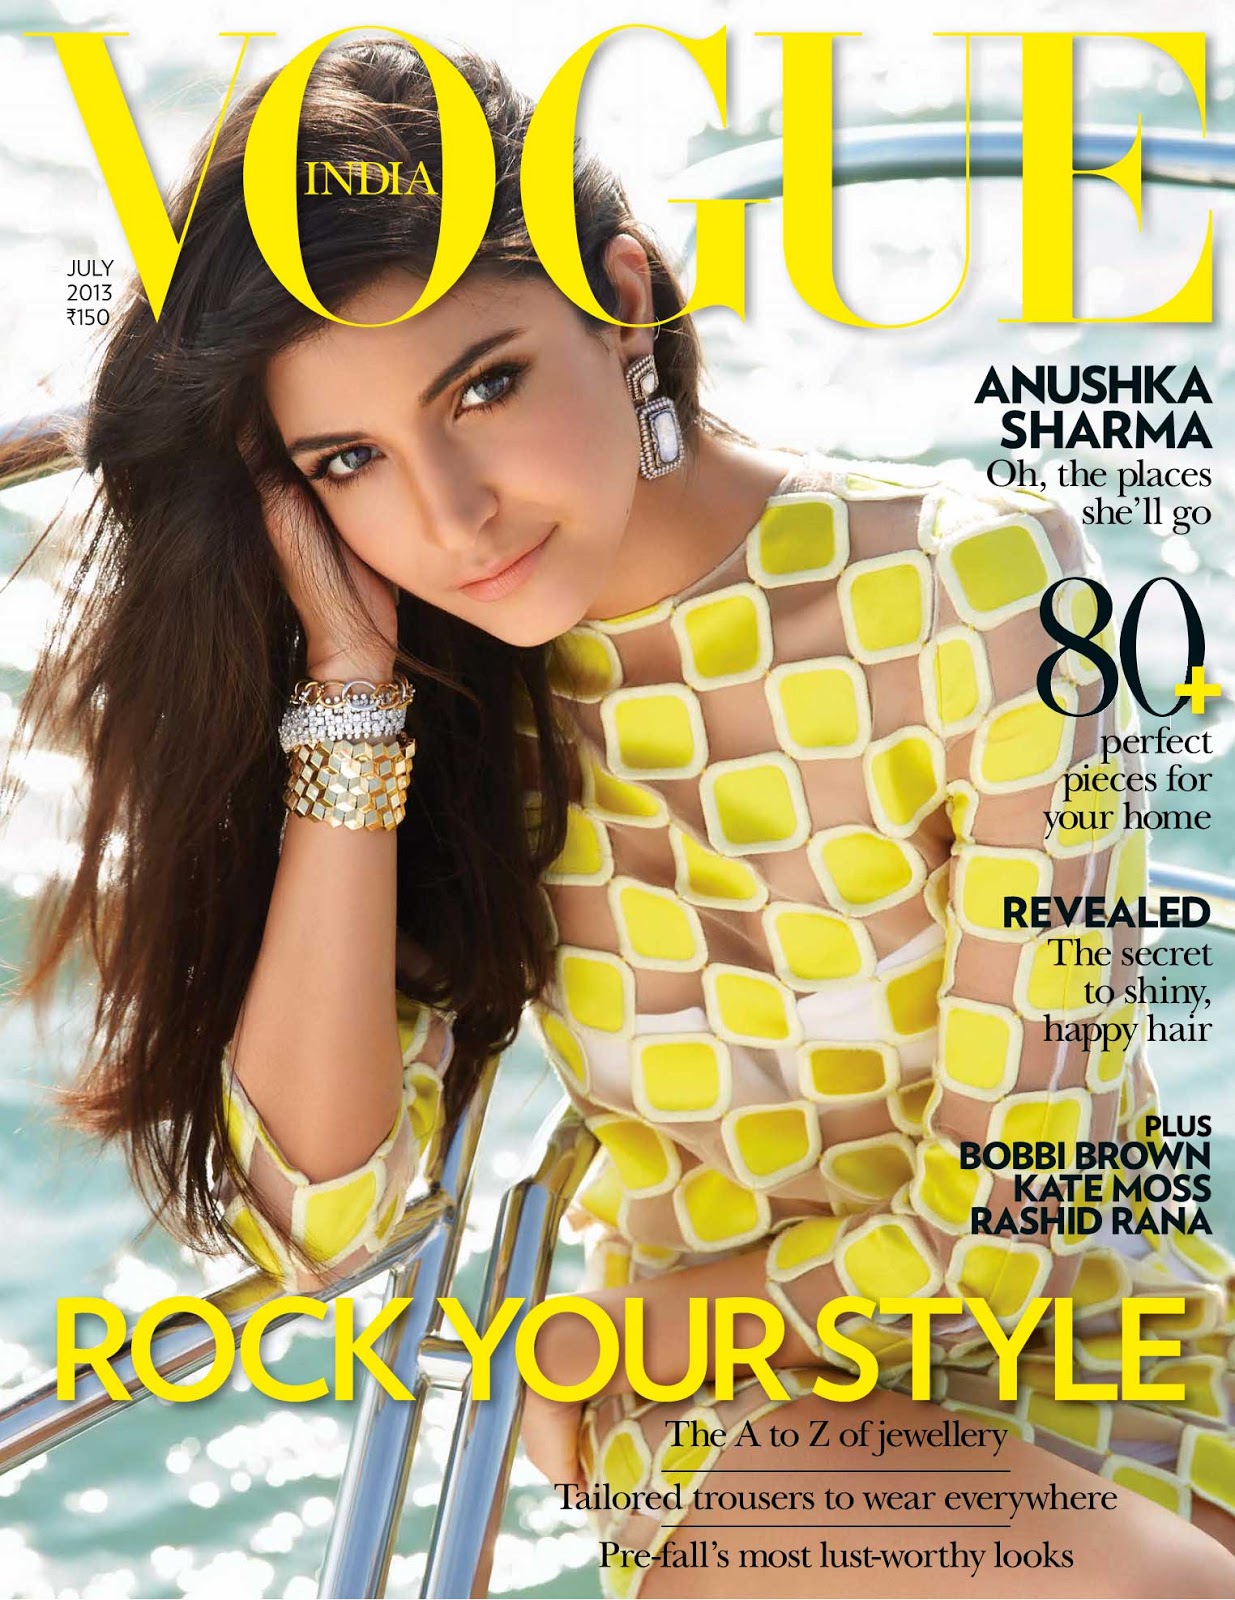 Deepika Padukone For Vogue India 2019 August Photoshoot